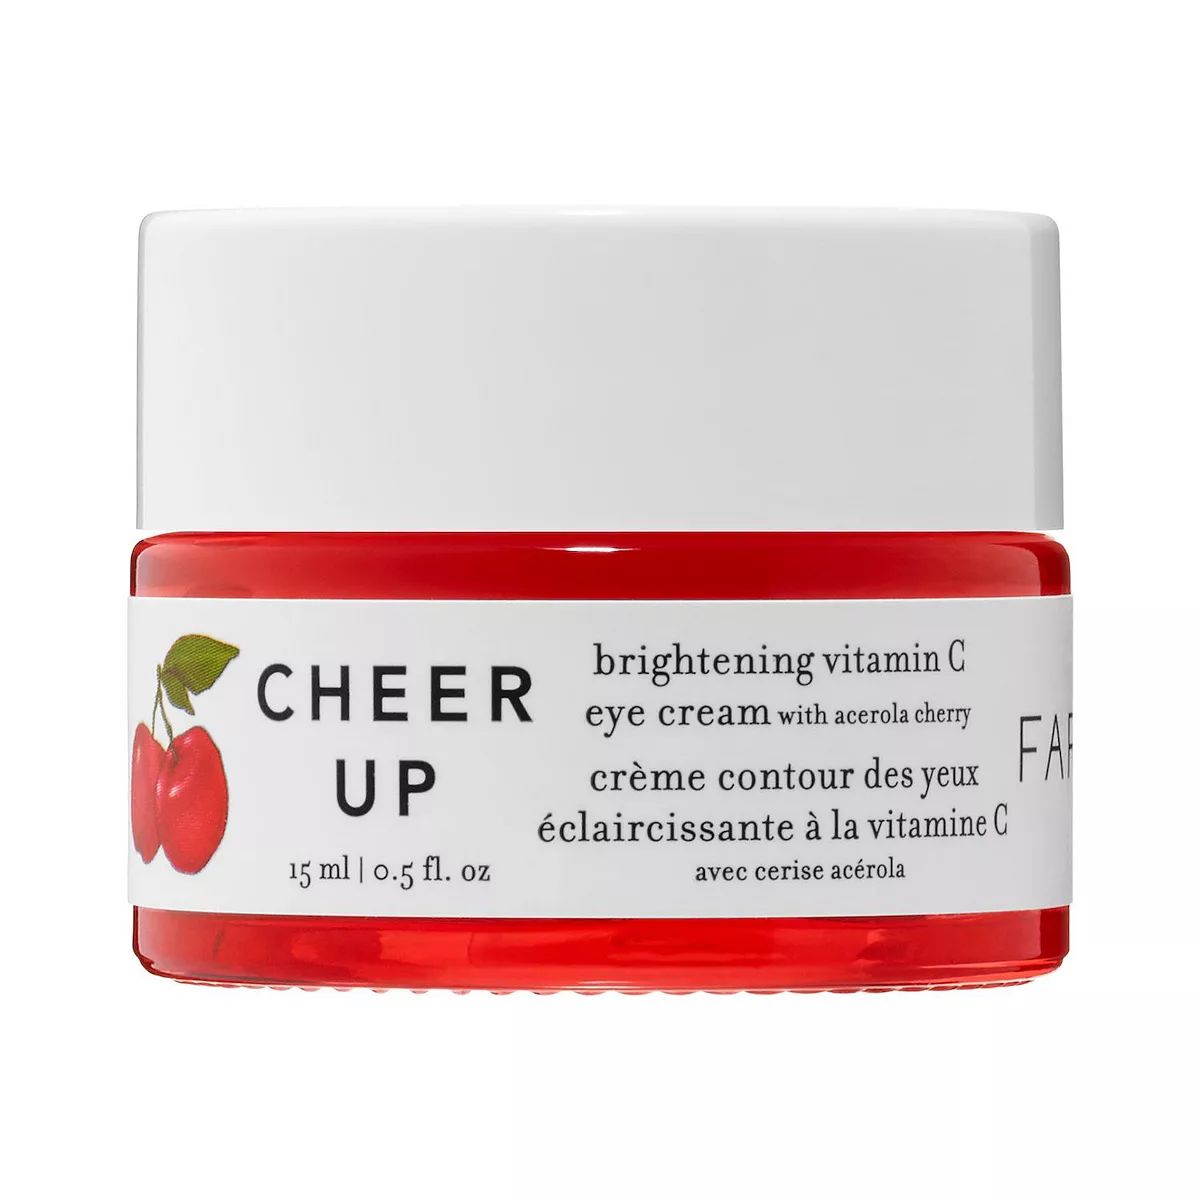 Farmacy Cheer Up Brightening Vitamin C Eye Cream with Acerola Cherry | Kohl's